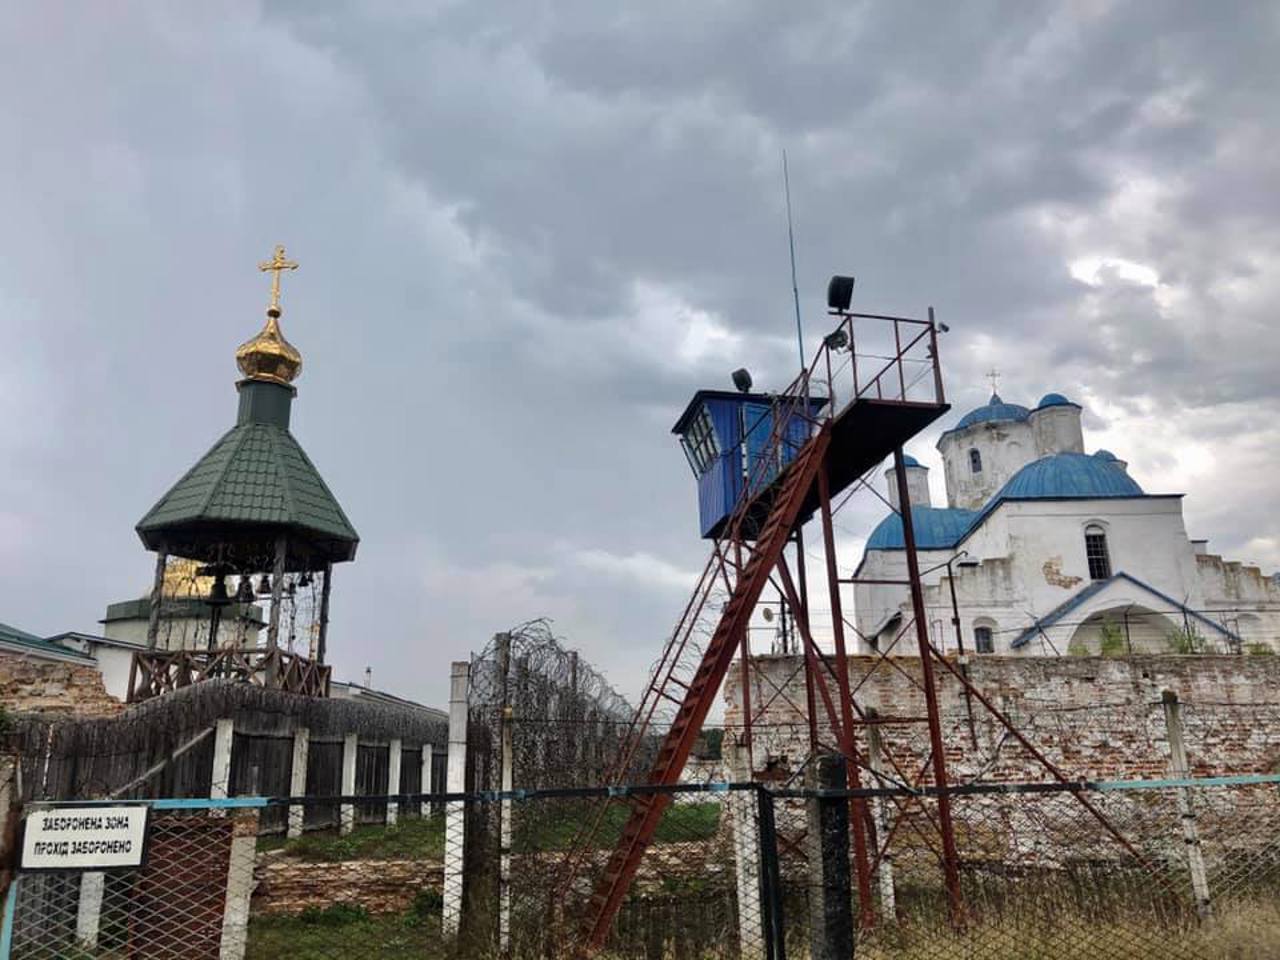 Kharlampiivskyi Monastery, Hamaliivka